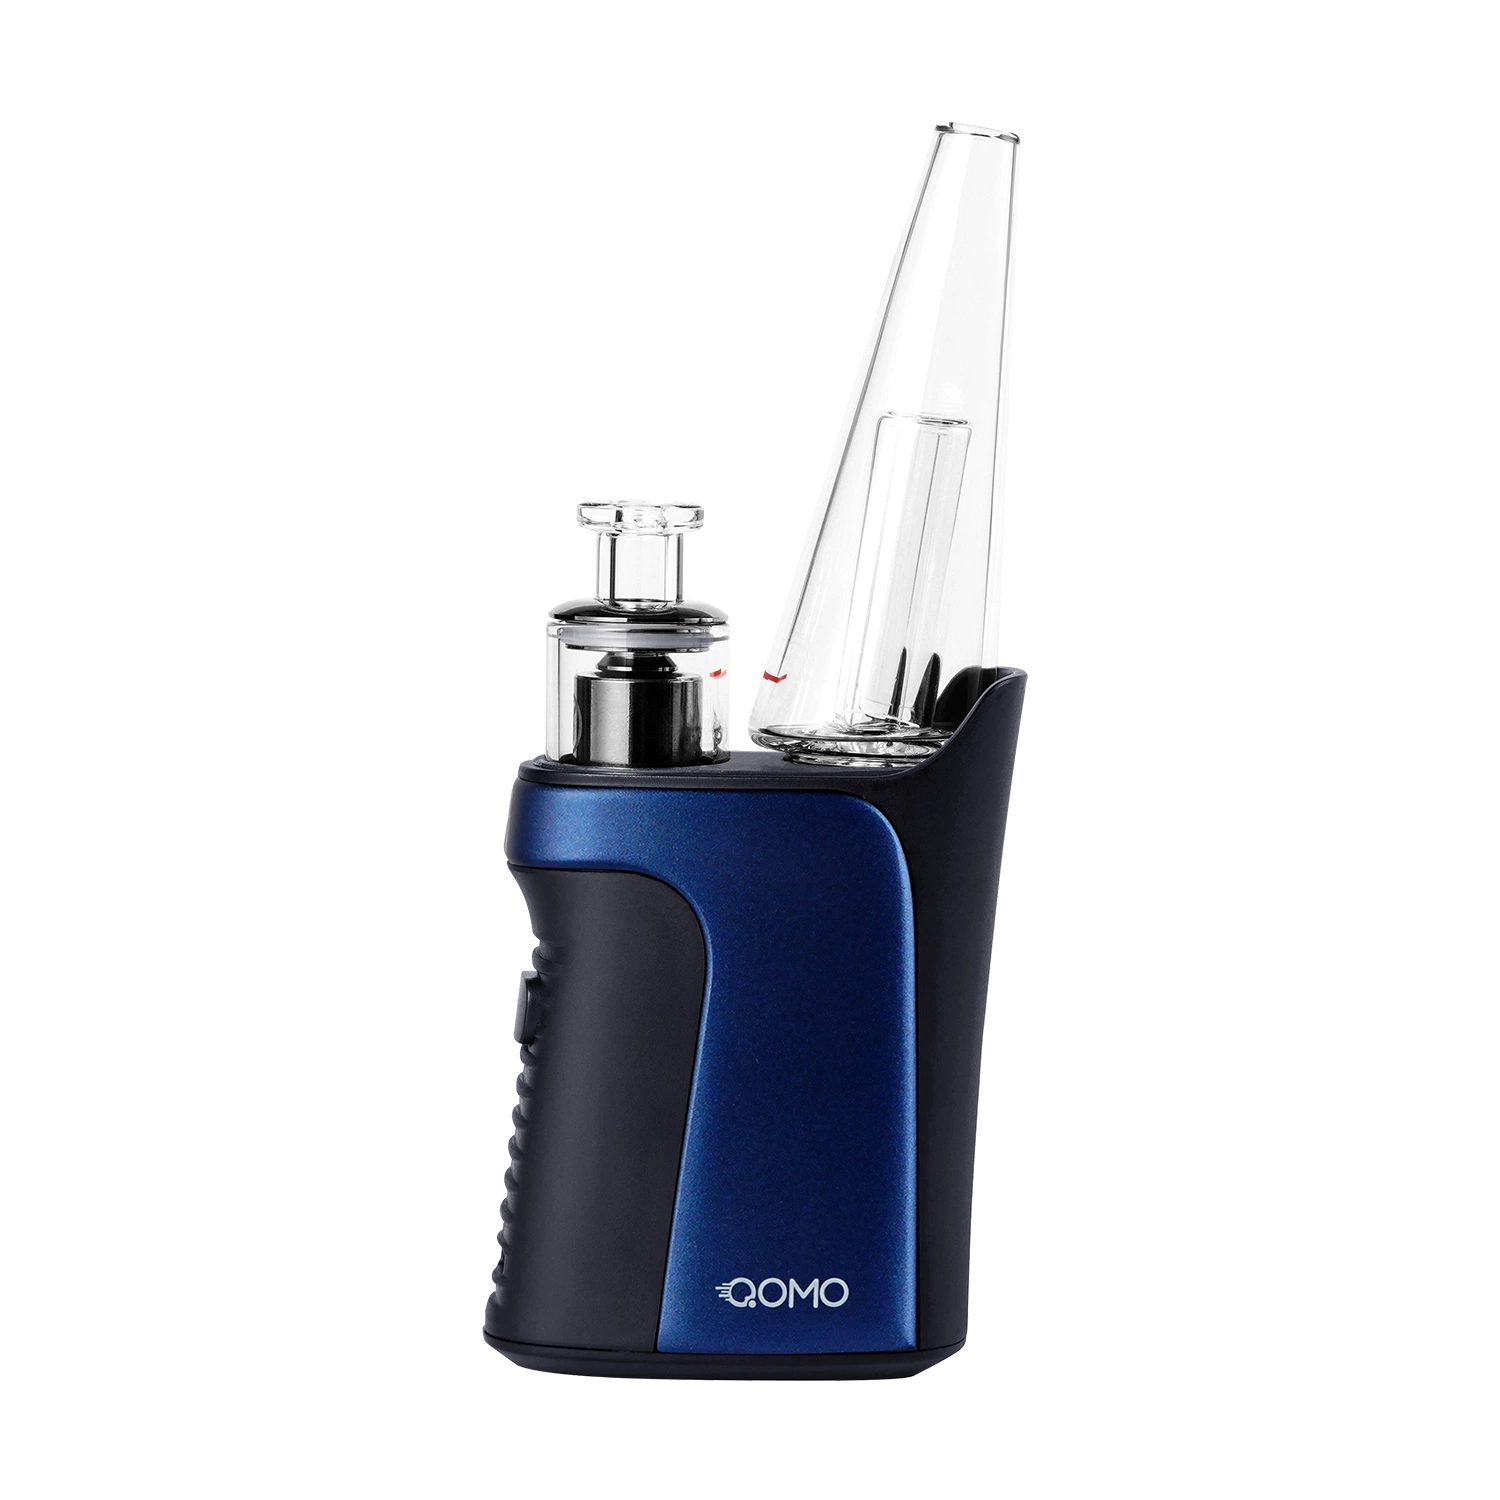 Xmax Qomo 1350mAh Battery Electronic Cigarette DAB Rig Concentrate Portable Vaporizer